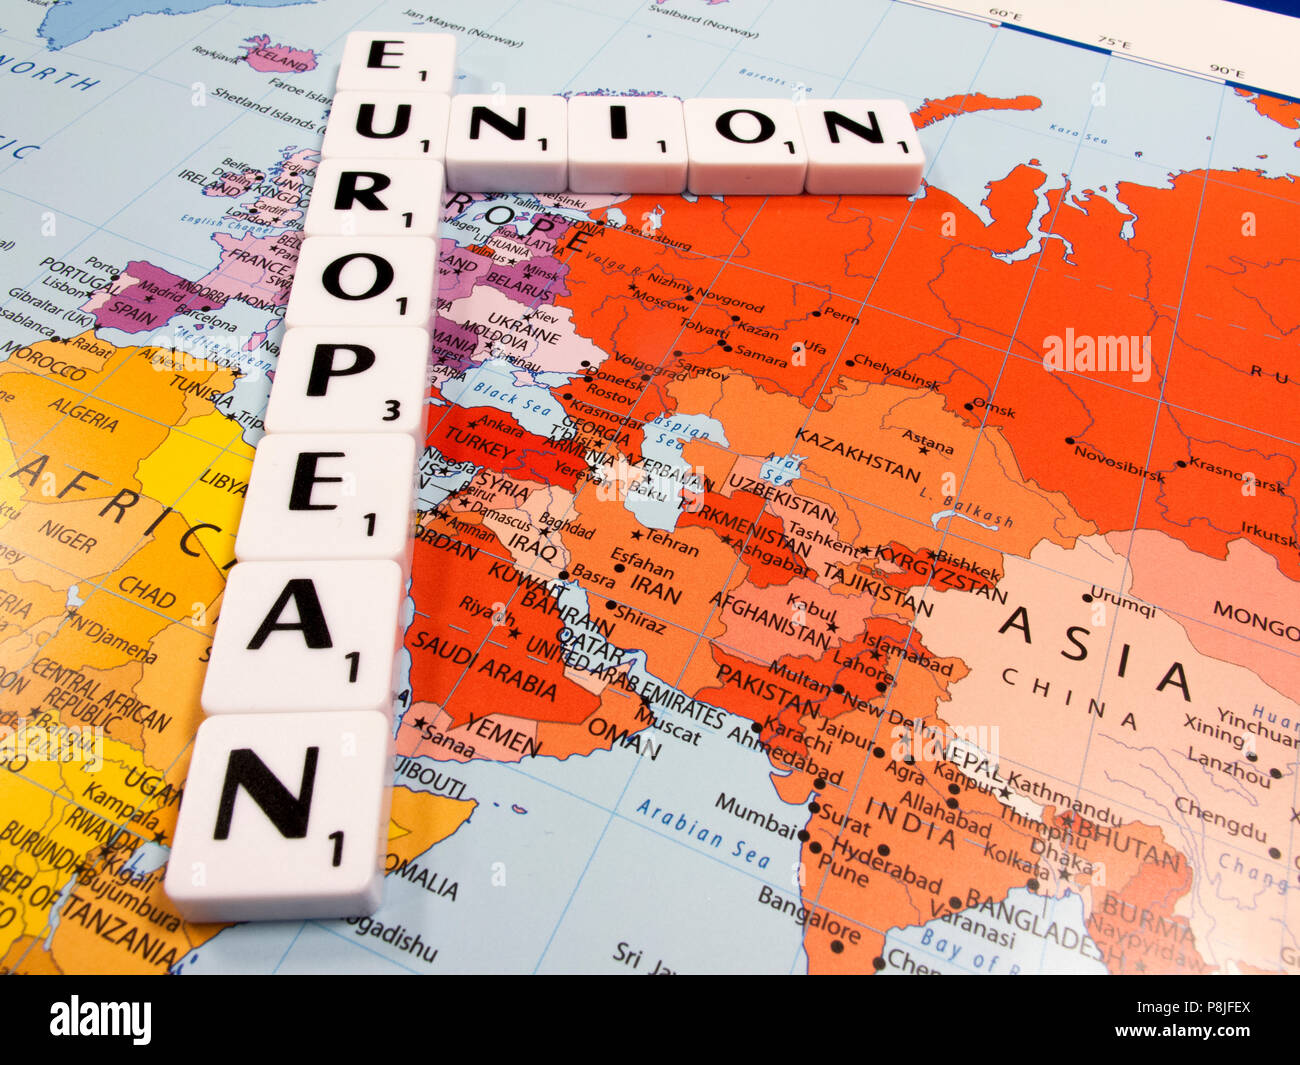 representation of the European Union, political and economic union of twenty eight member states Stock Photo